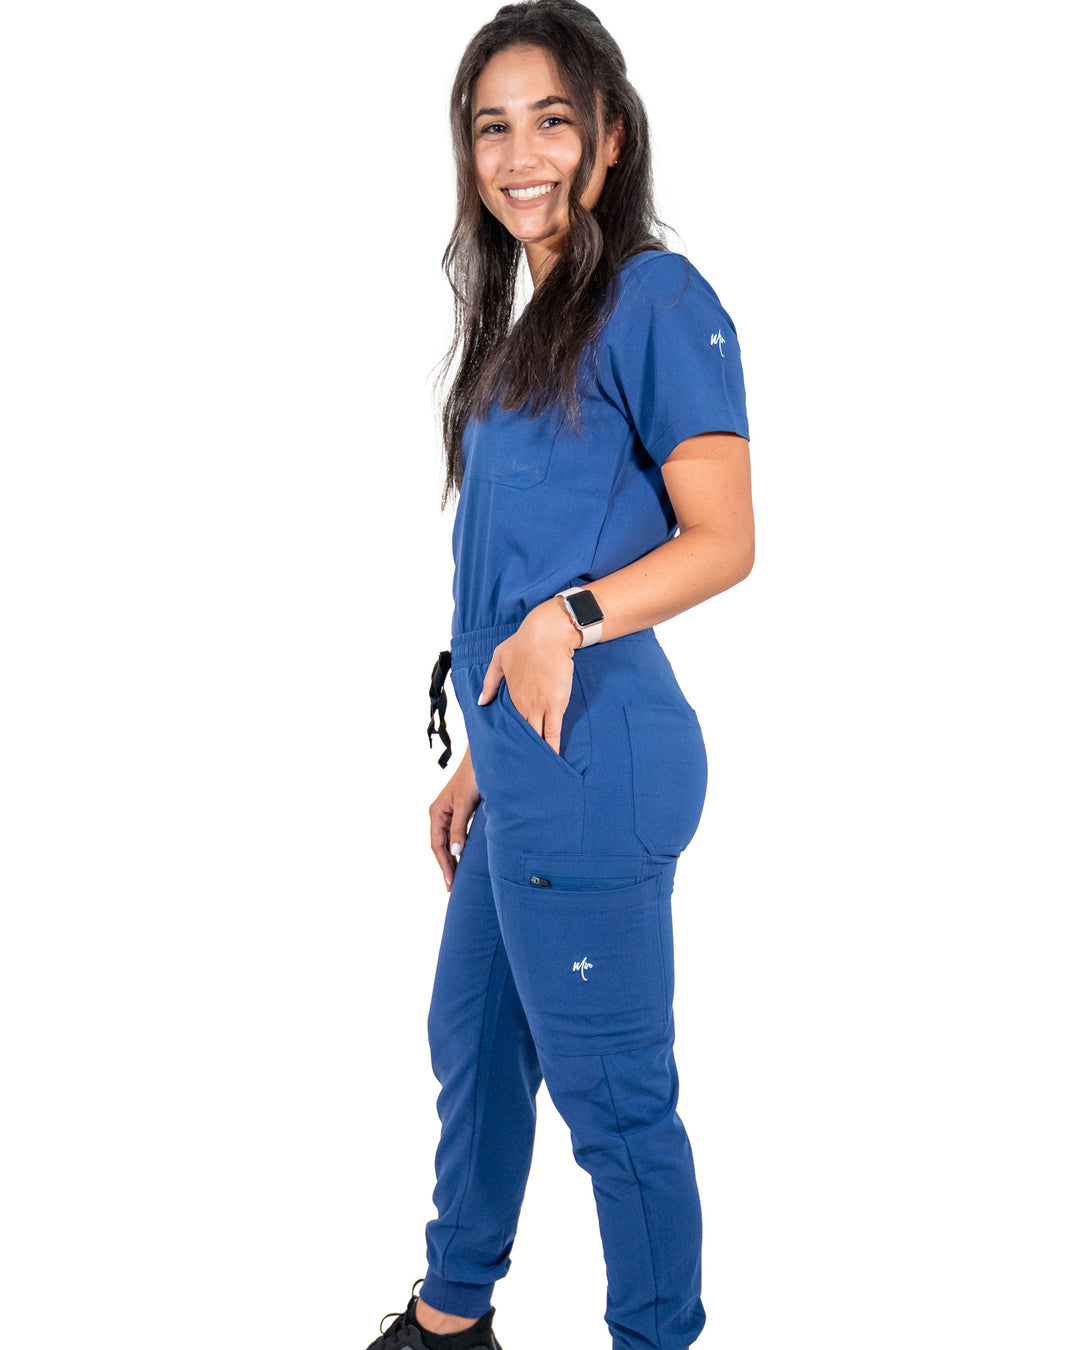 women's Navy Blue Scrub Top - Jogger Scrubs by Millennials In Medicine (Mim Scrubs)